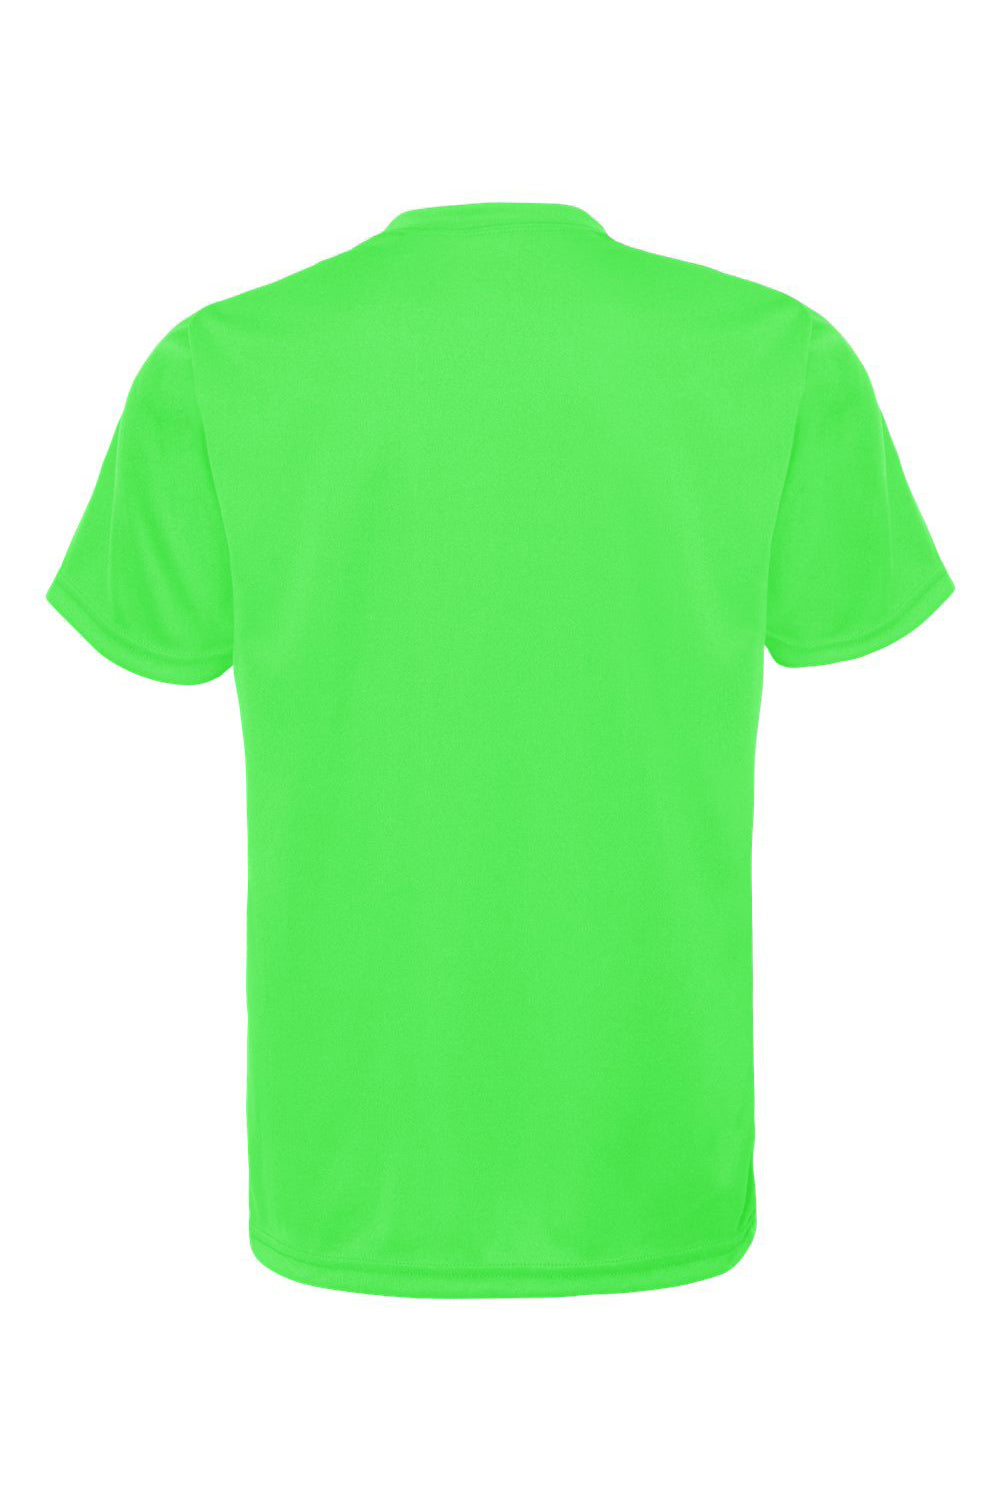 C2 Sport 5200 Youth Performance Moisture Wicking Short Sleeve Crewneck T-Shirt Lime Green Flat Back